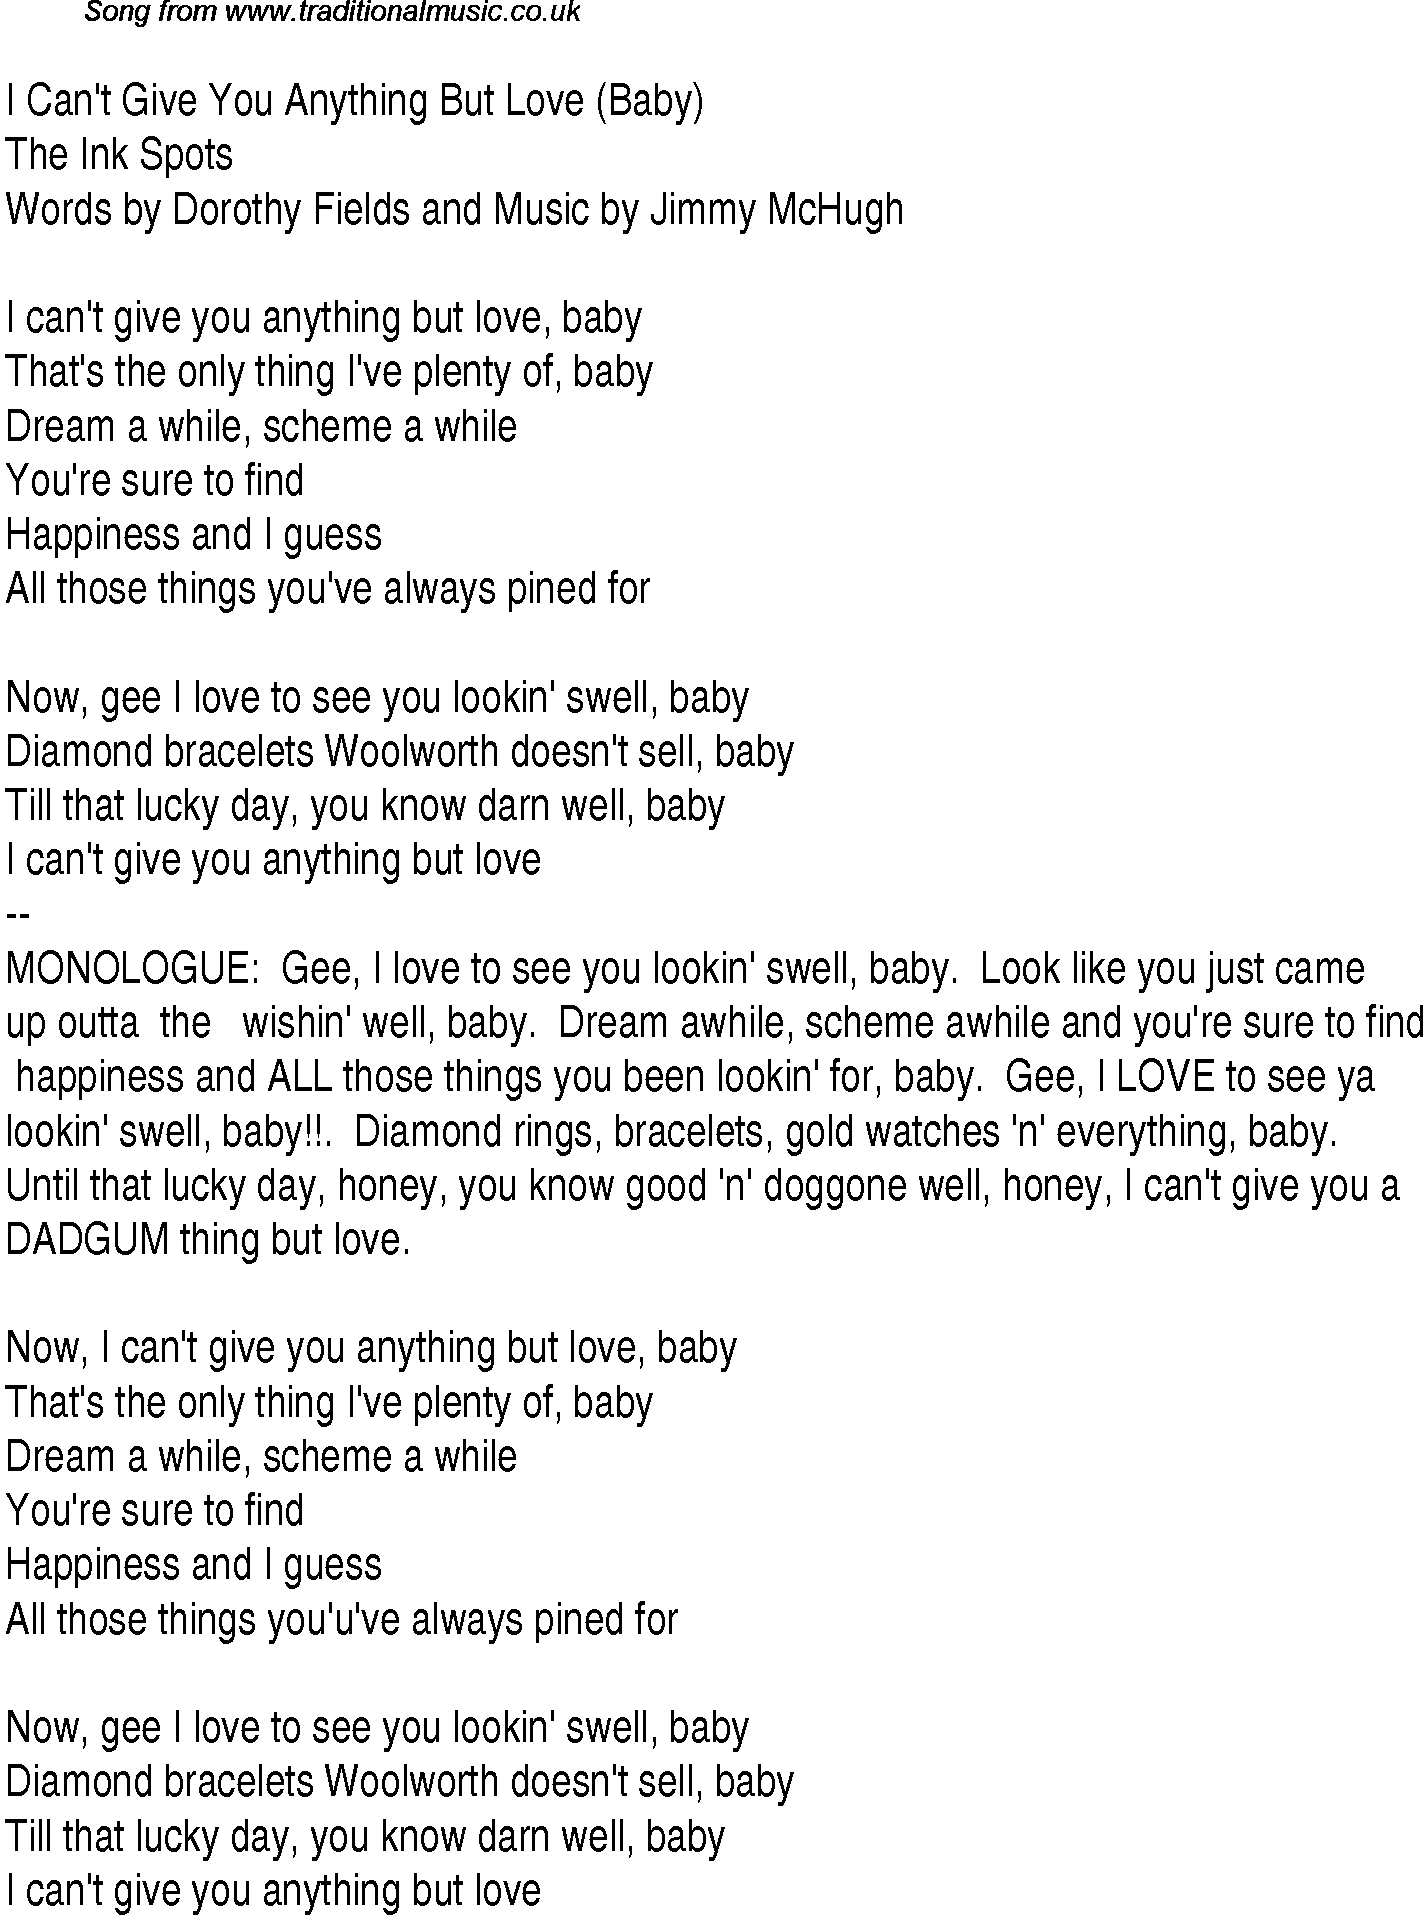 Baby girl текст песни